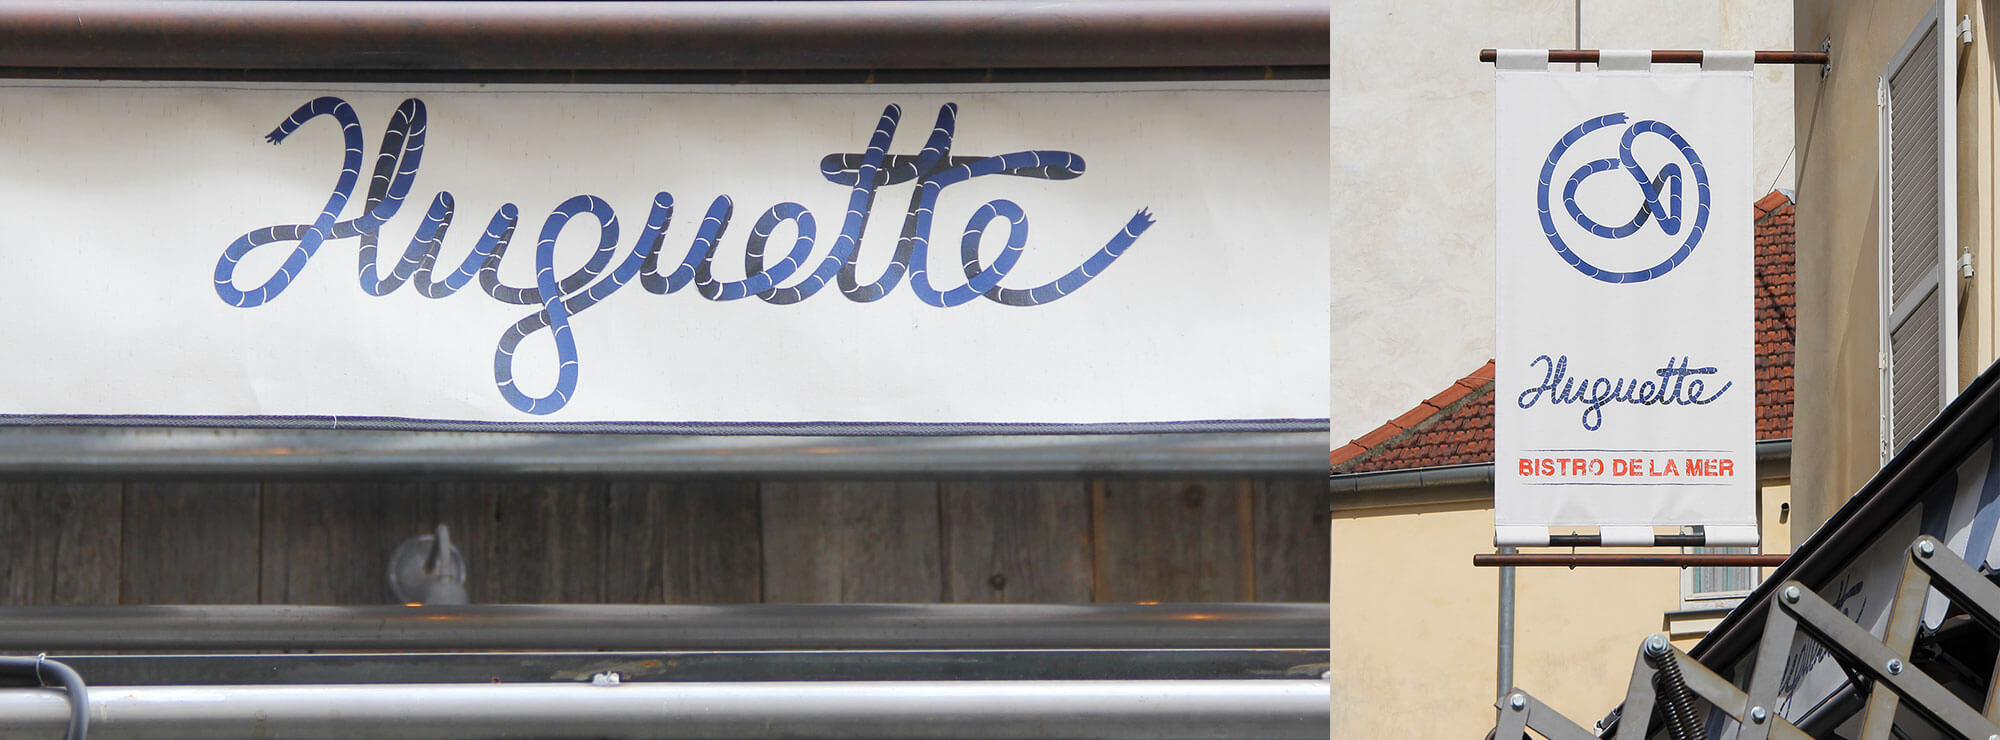 Huguette - an identity that reaches the open sea